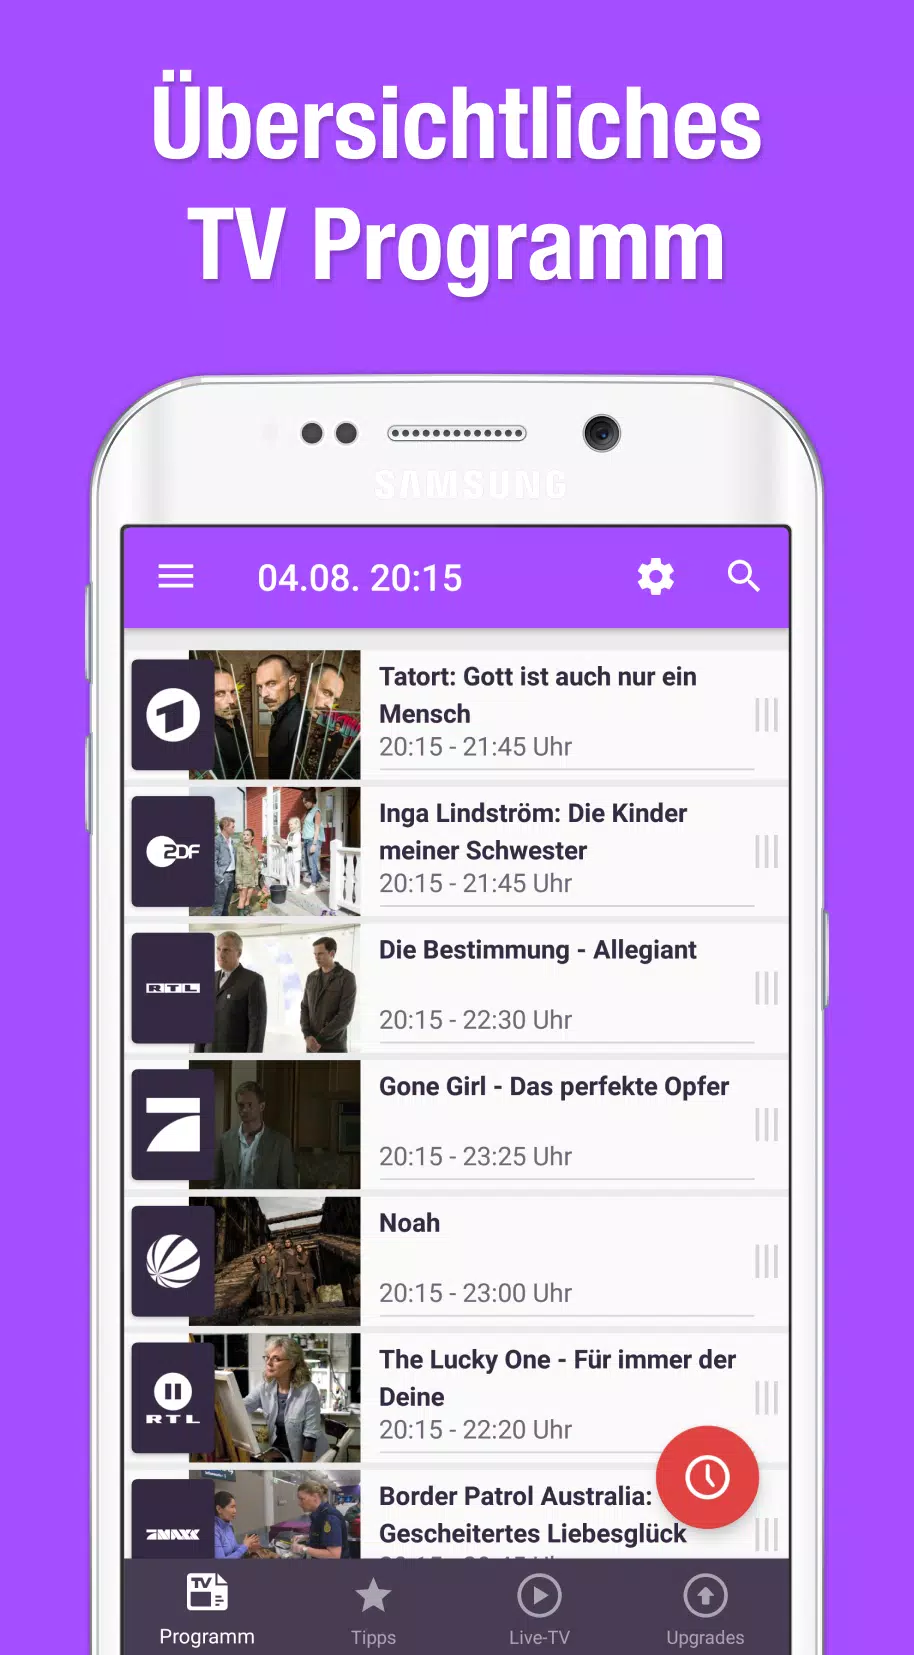 TV.de TV Programm App for Android - APK Download